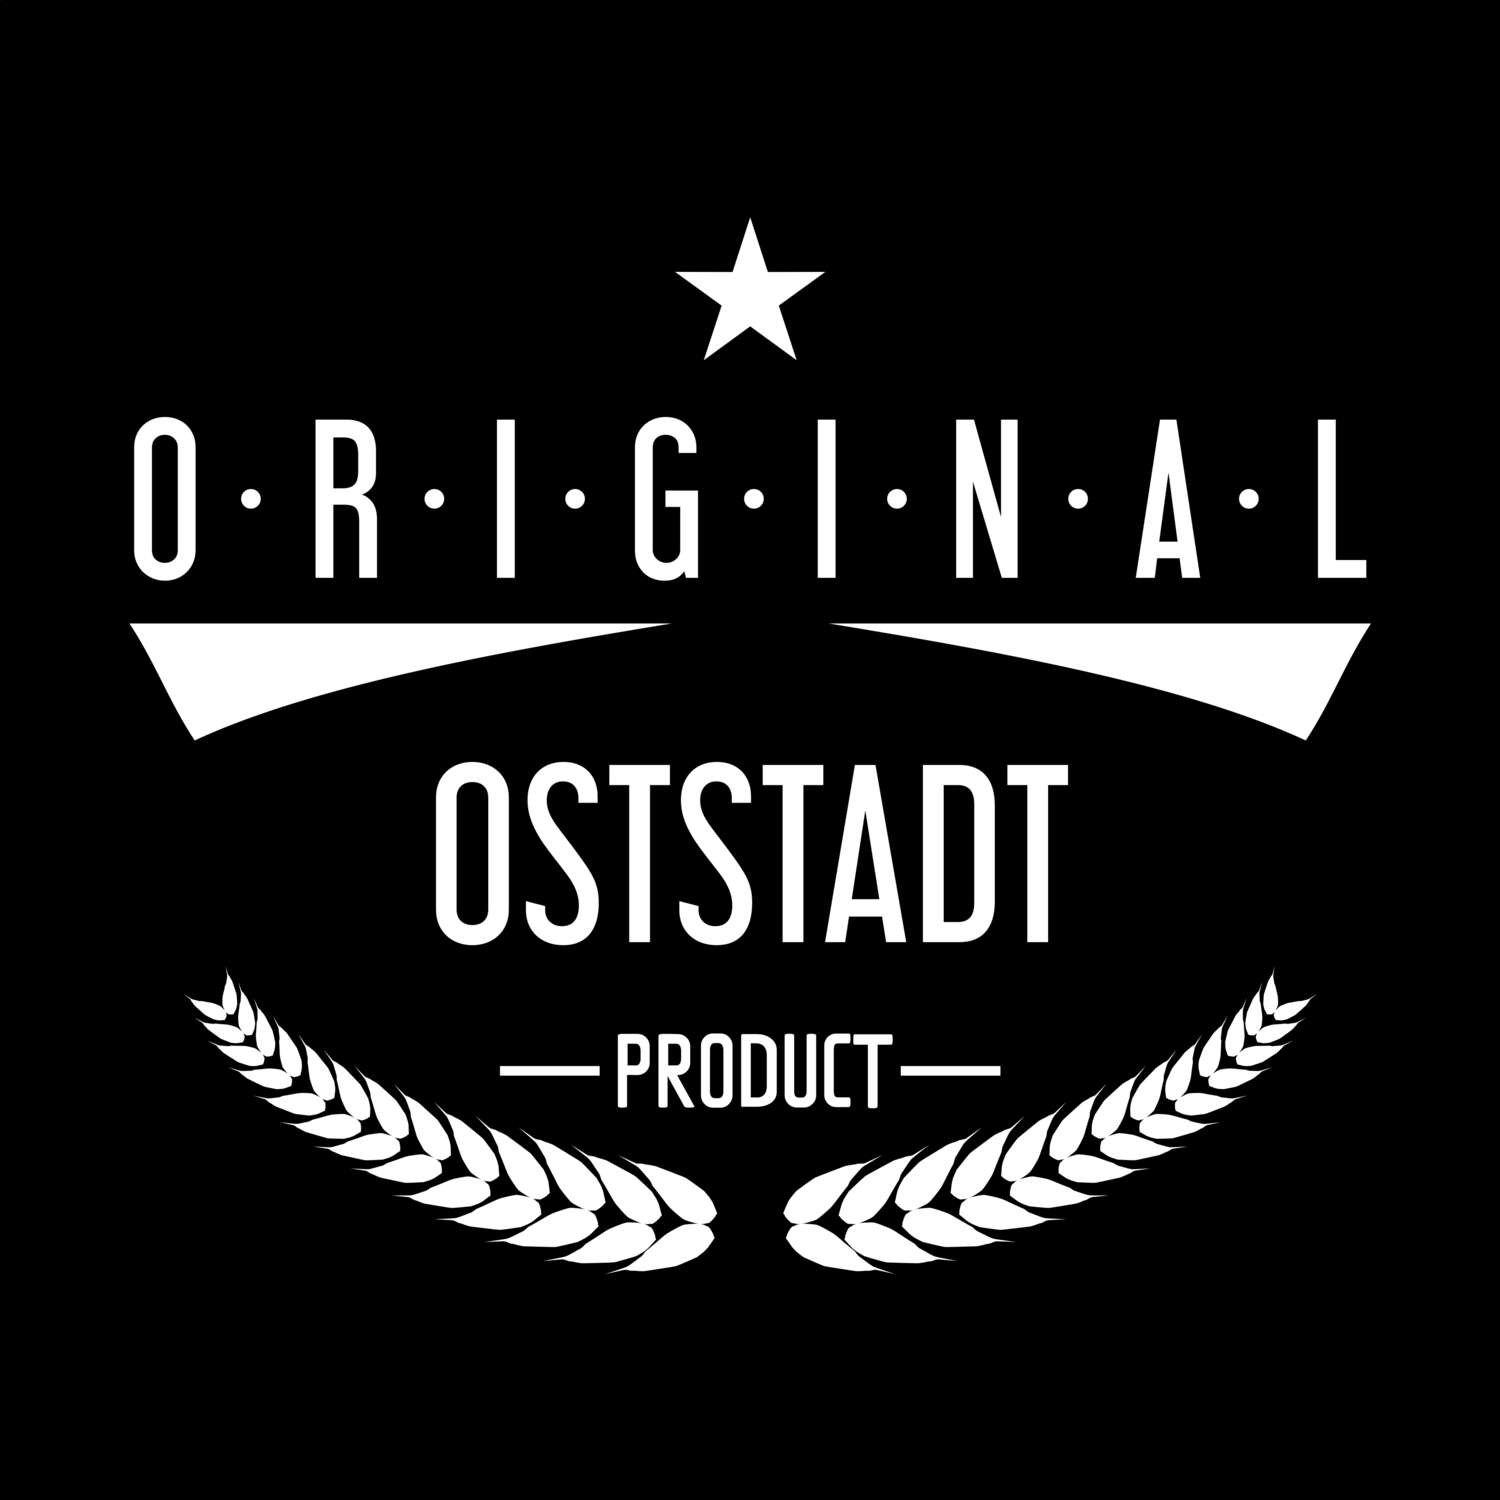 Oststadt T-Shirt »Original Product«